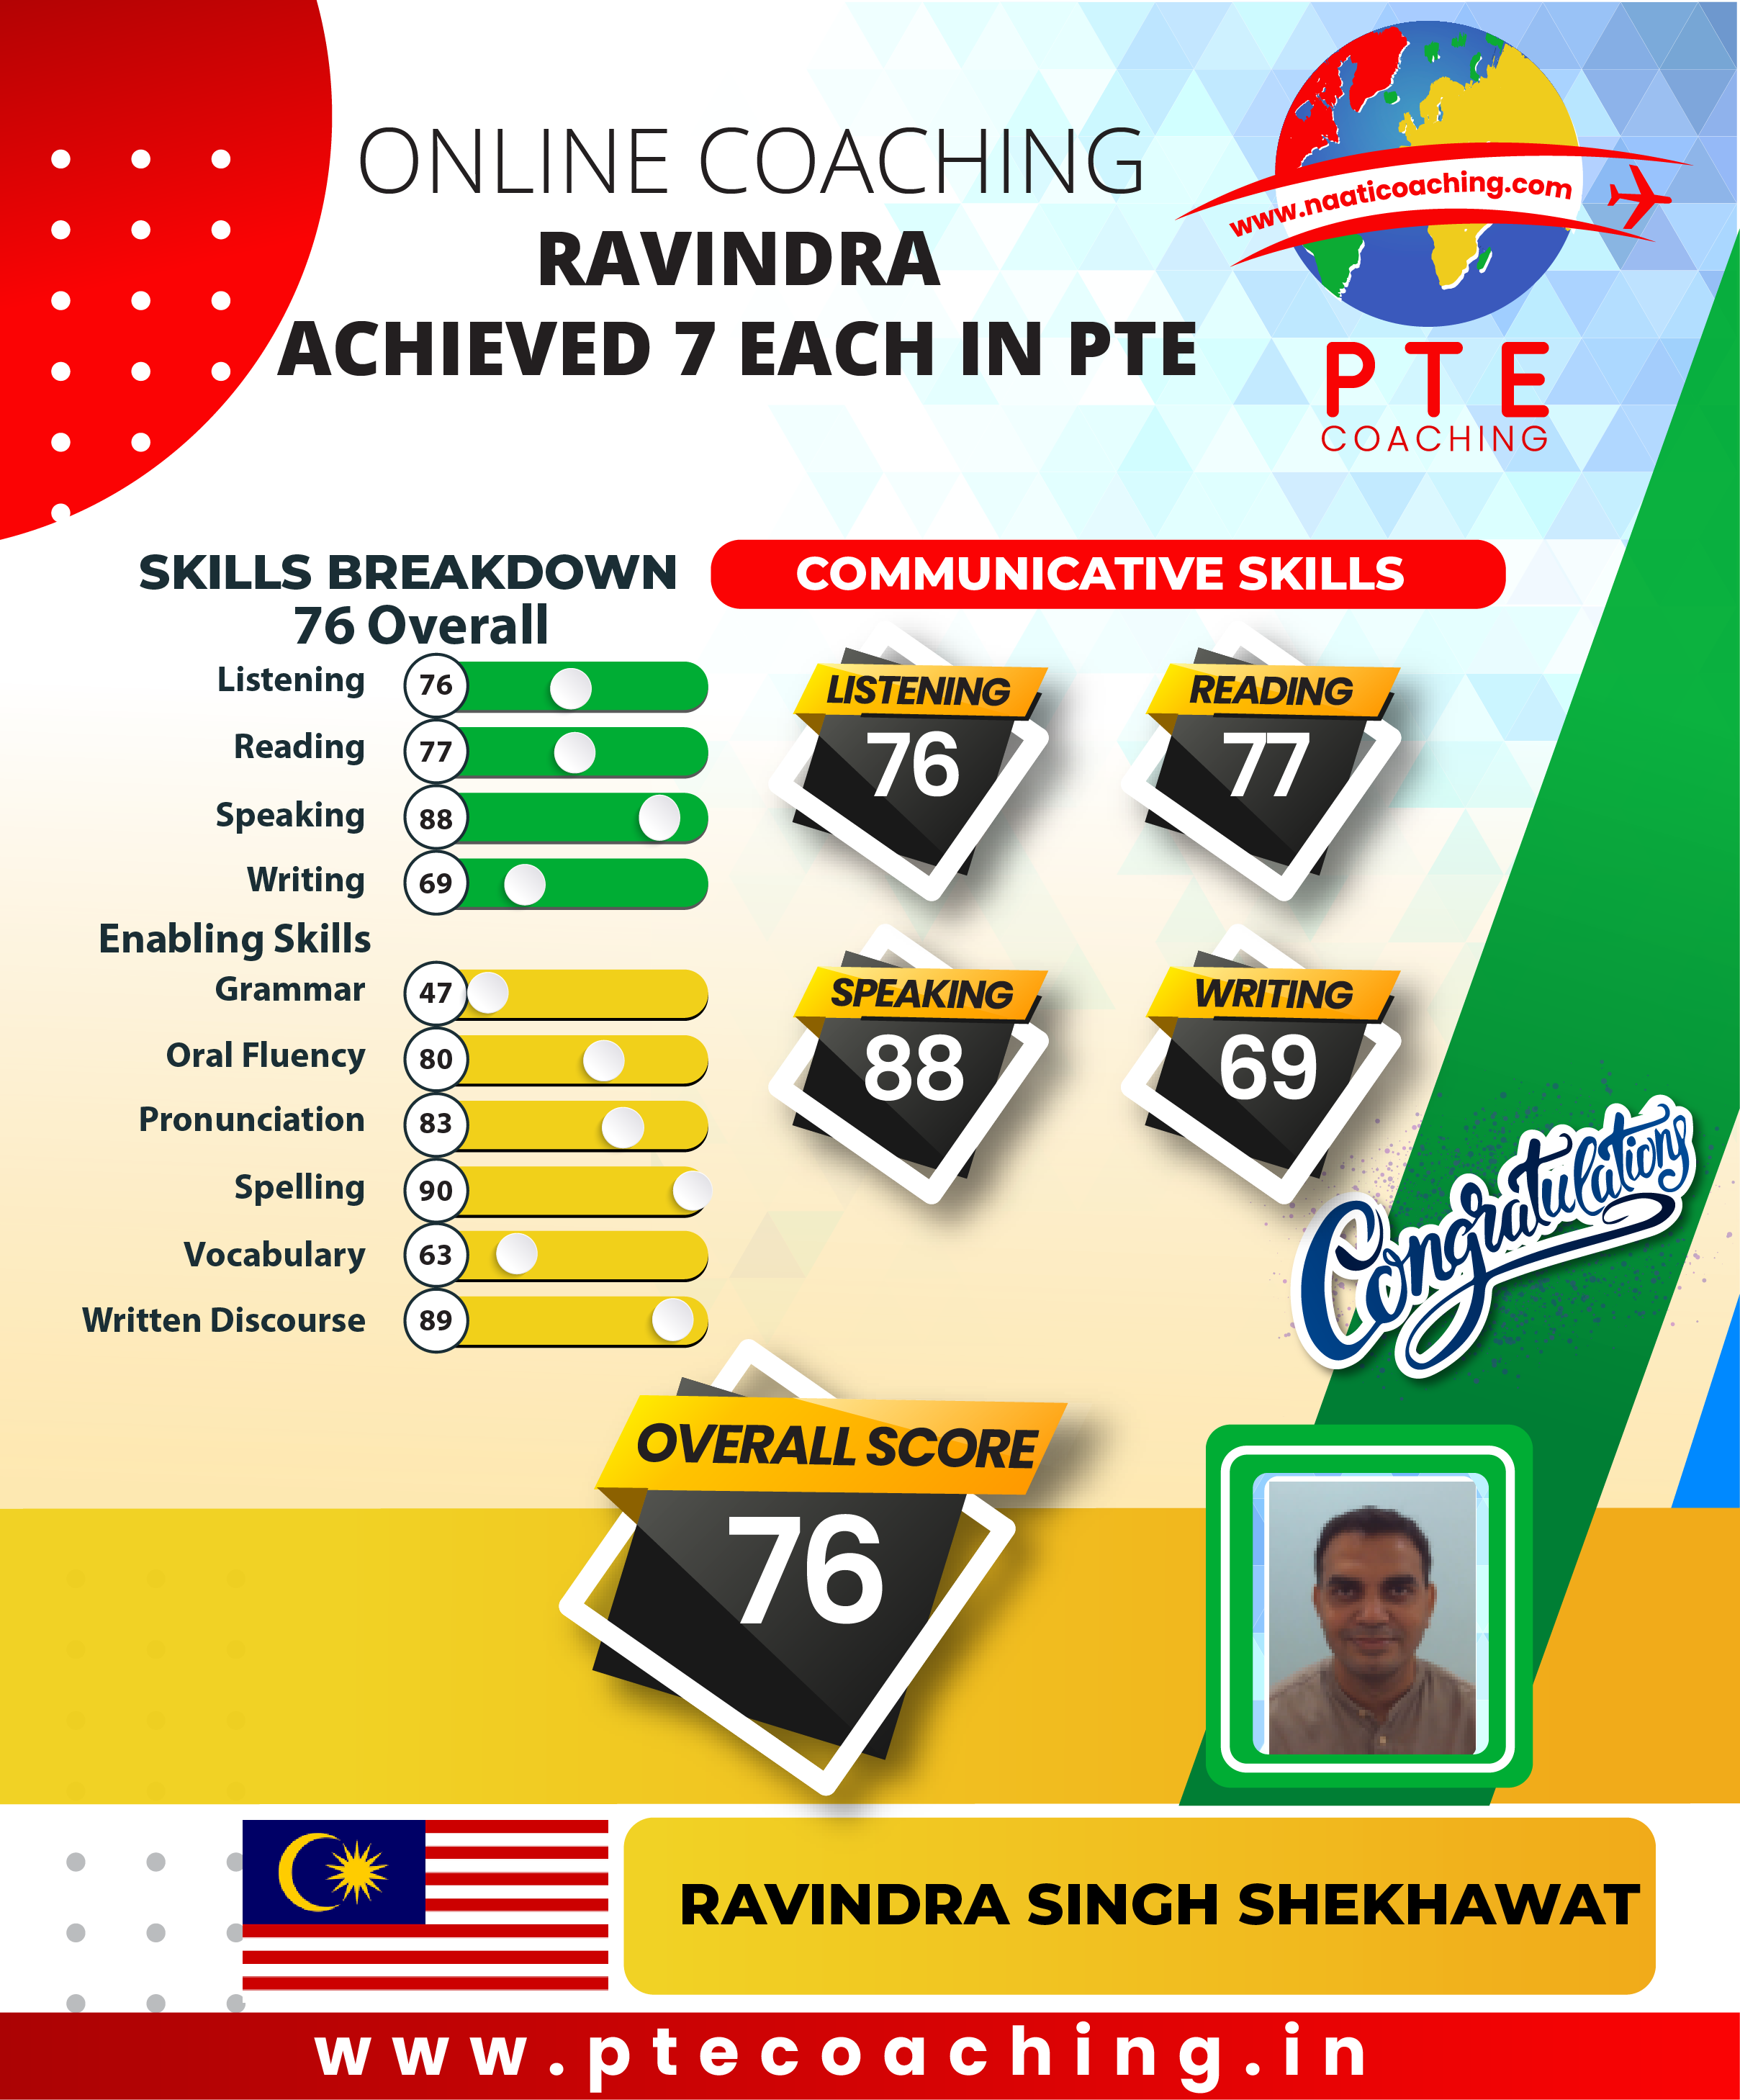 PTE Coaching Scorecard - Ravindra achieved 7 each in PTE